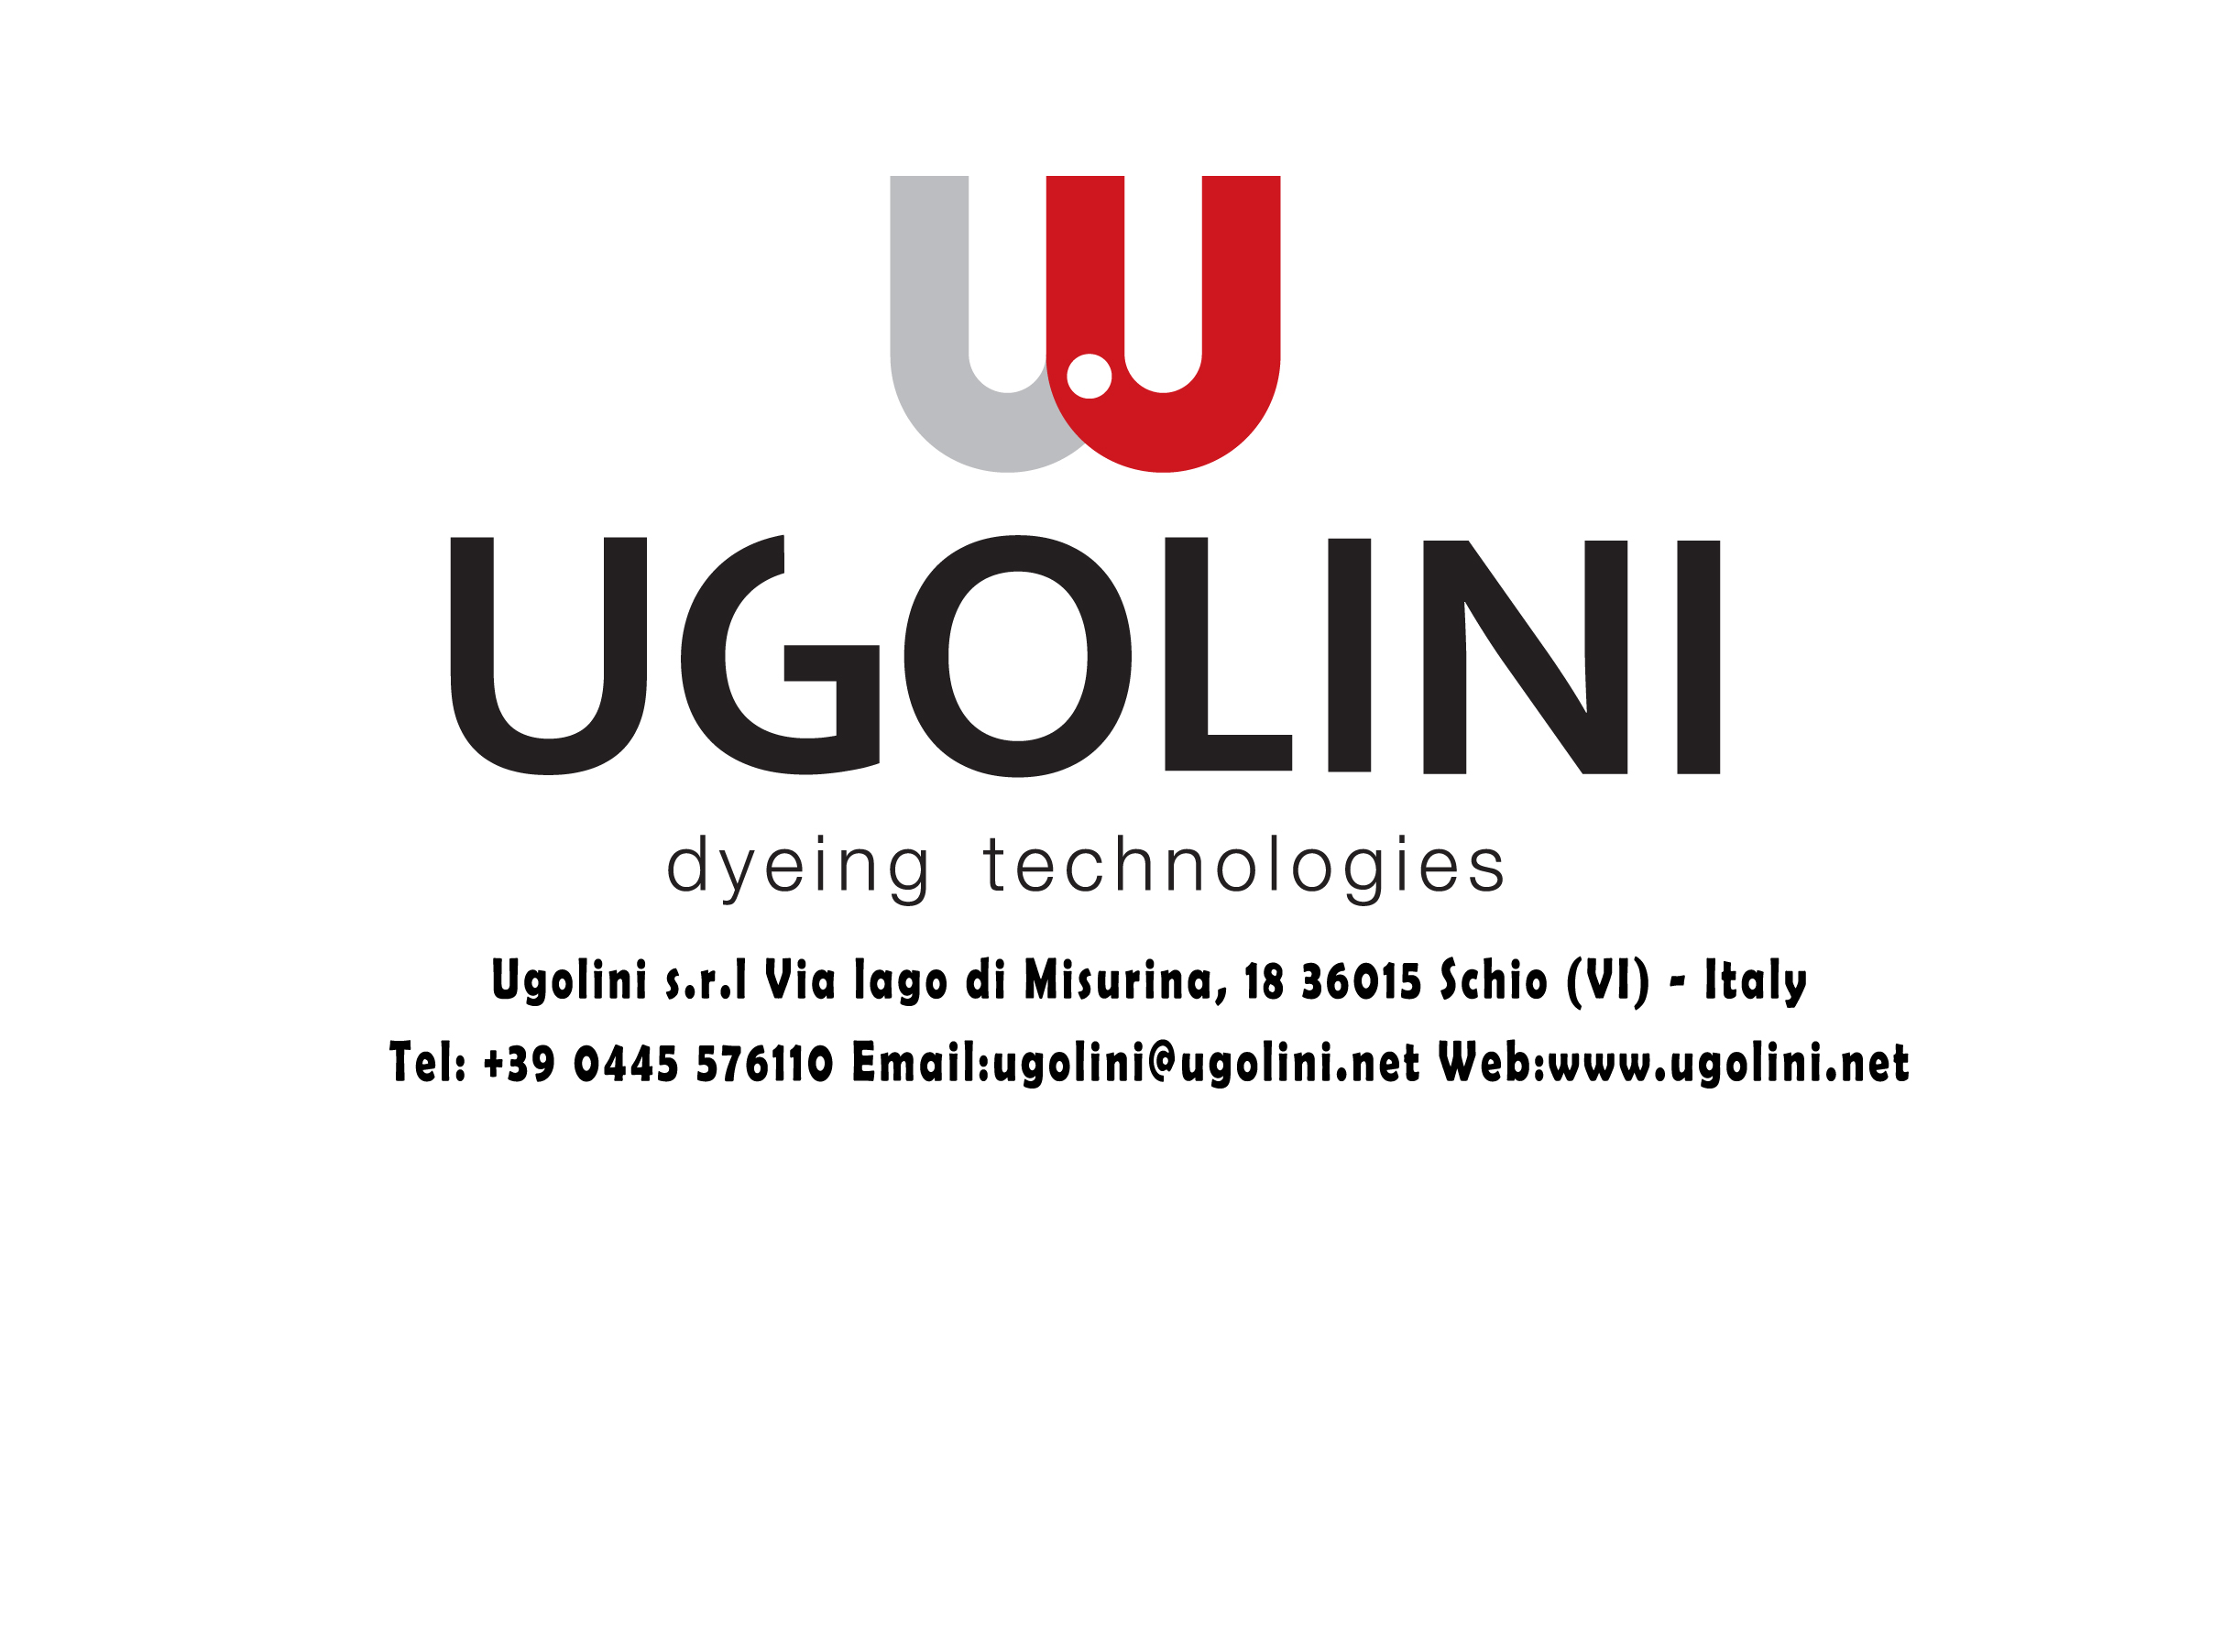 UGOLINI_standard grafici LOGO.indd